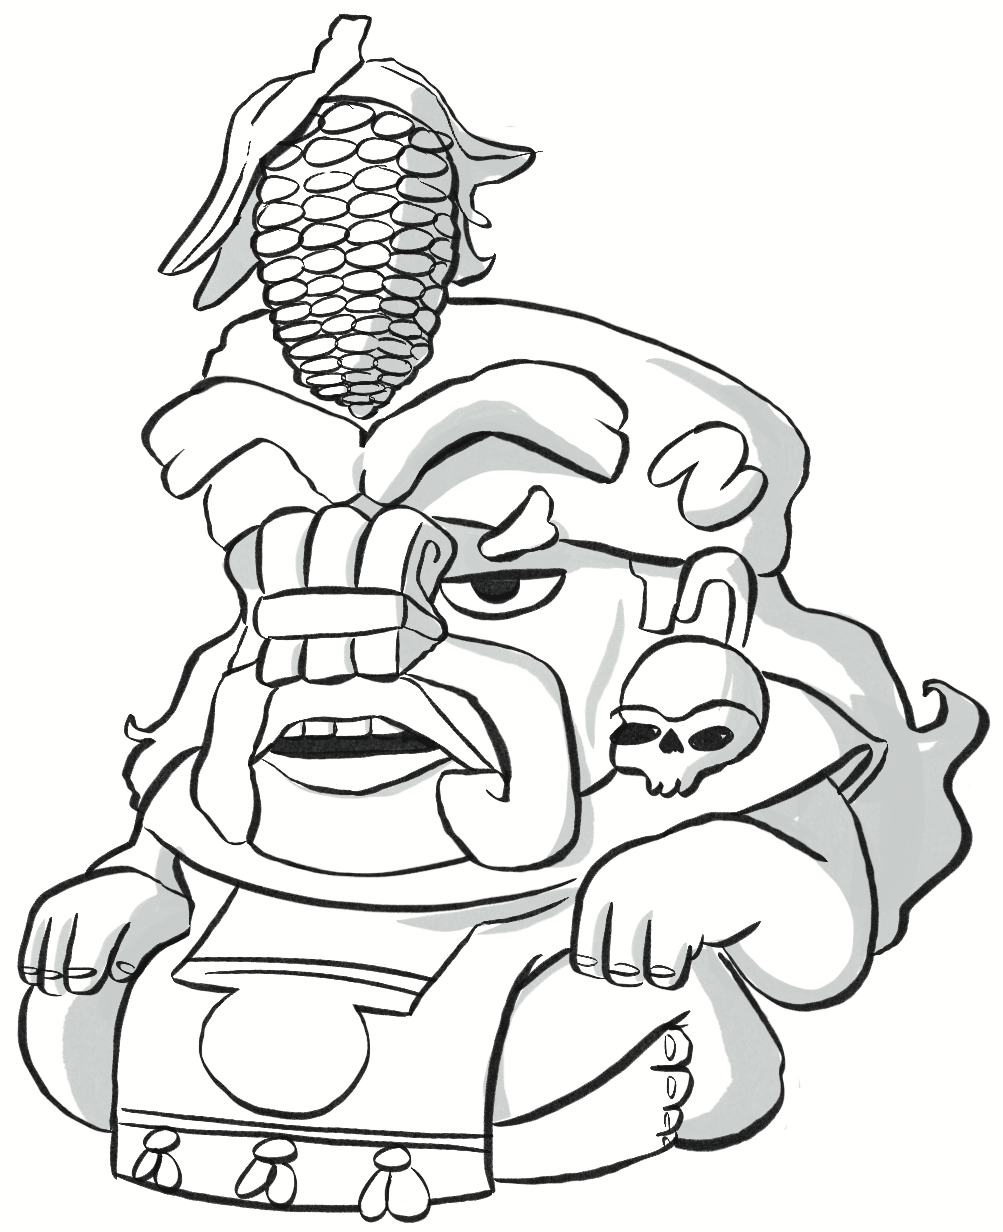 Corn God